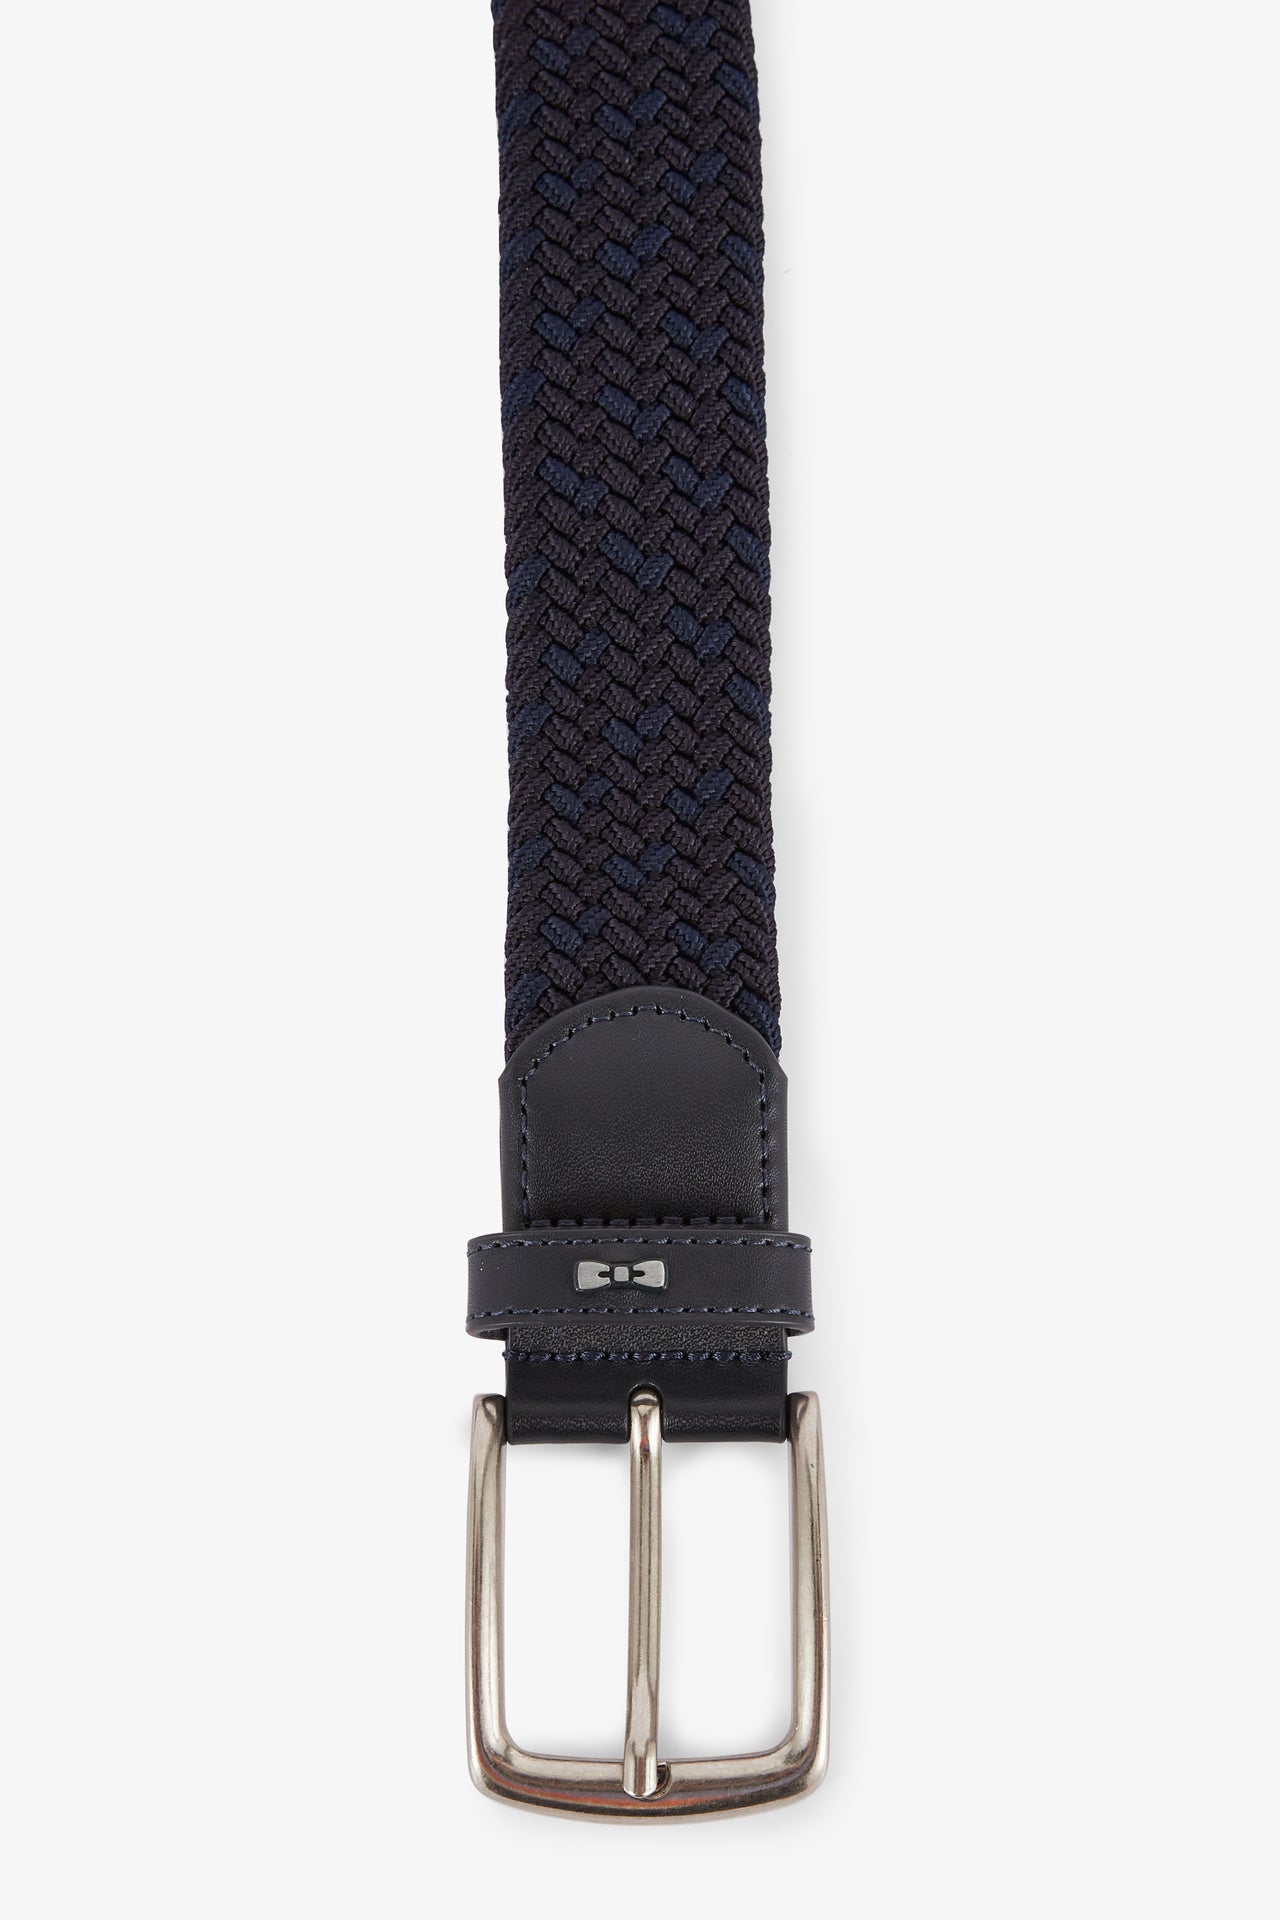 Navy blue braided belt - Image 2